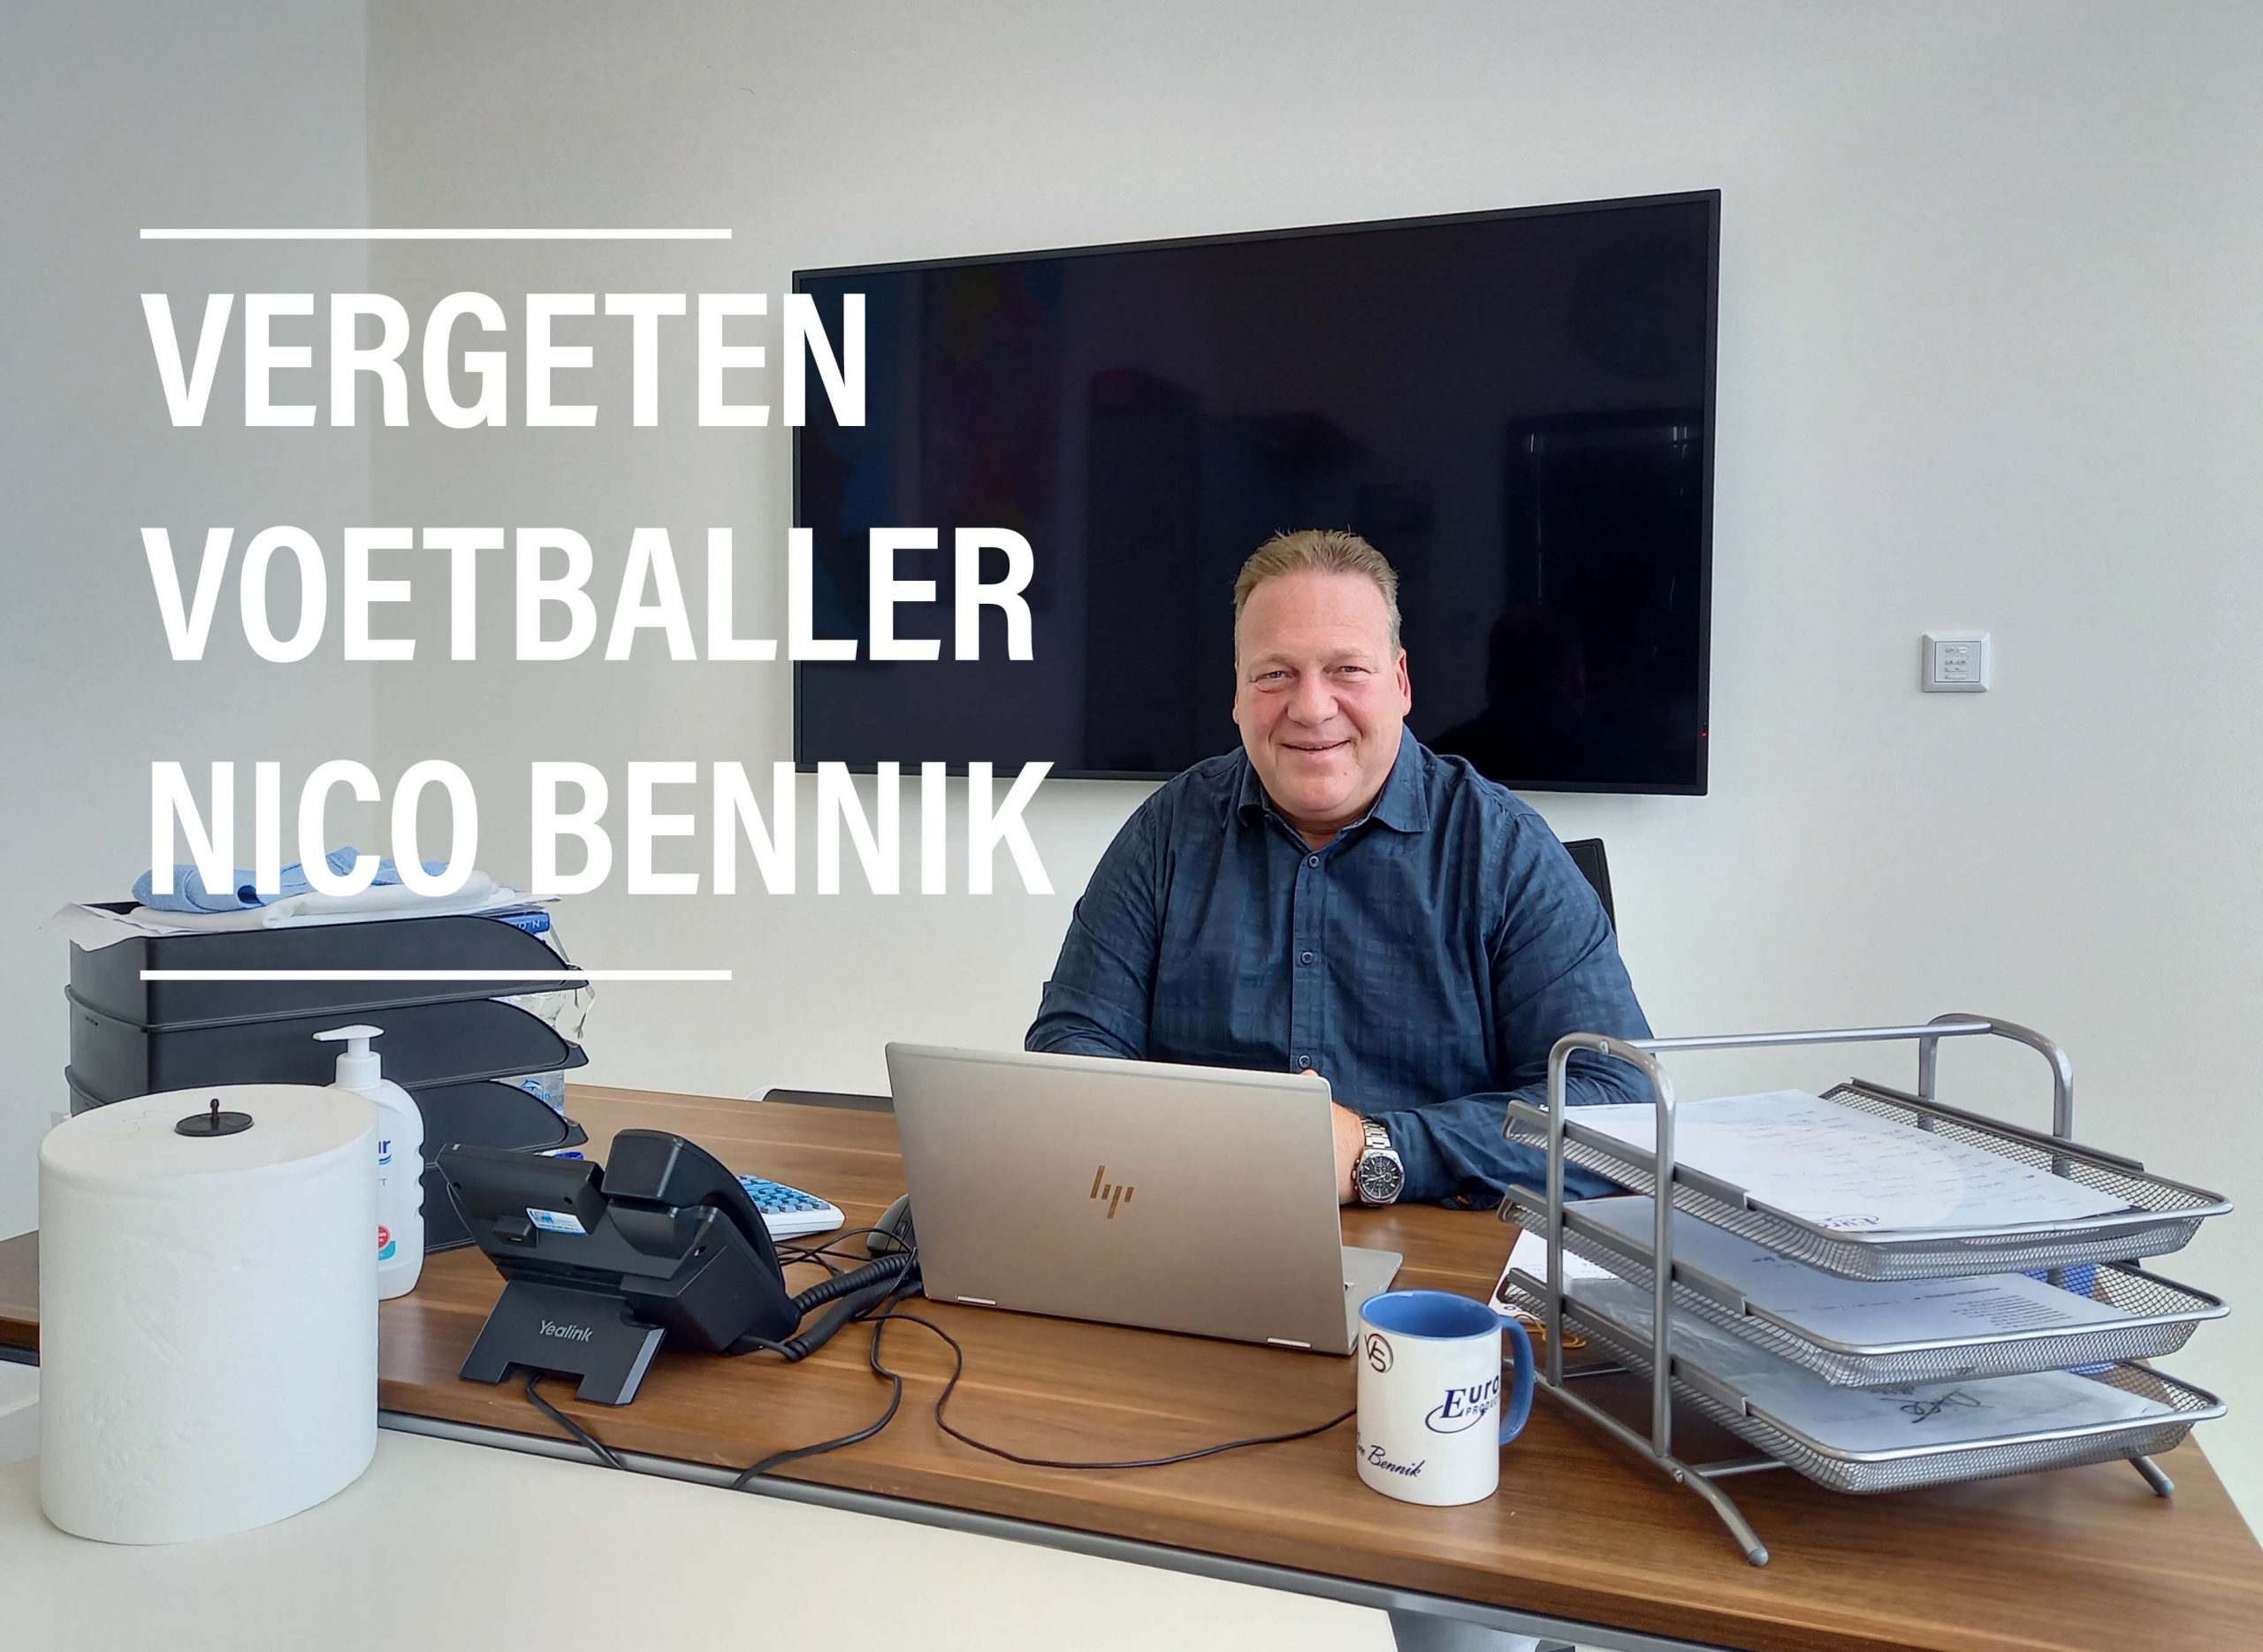 Vergeten voetballer Nico Bennik